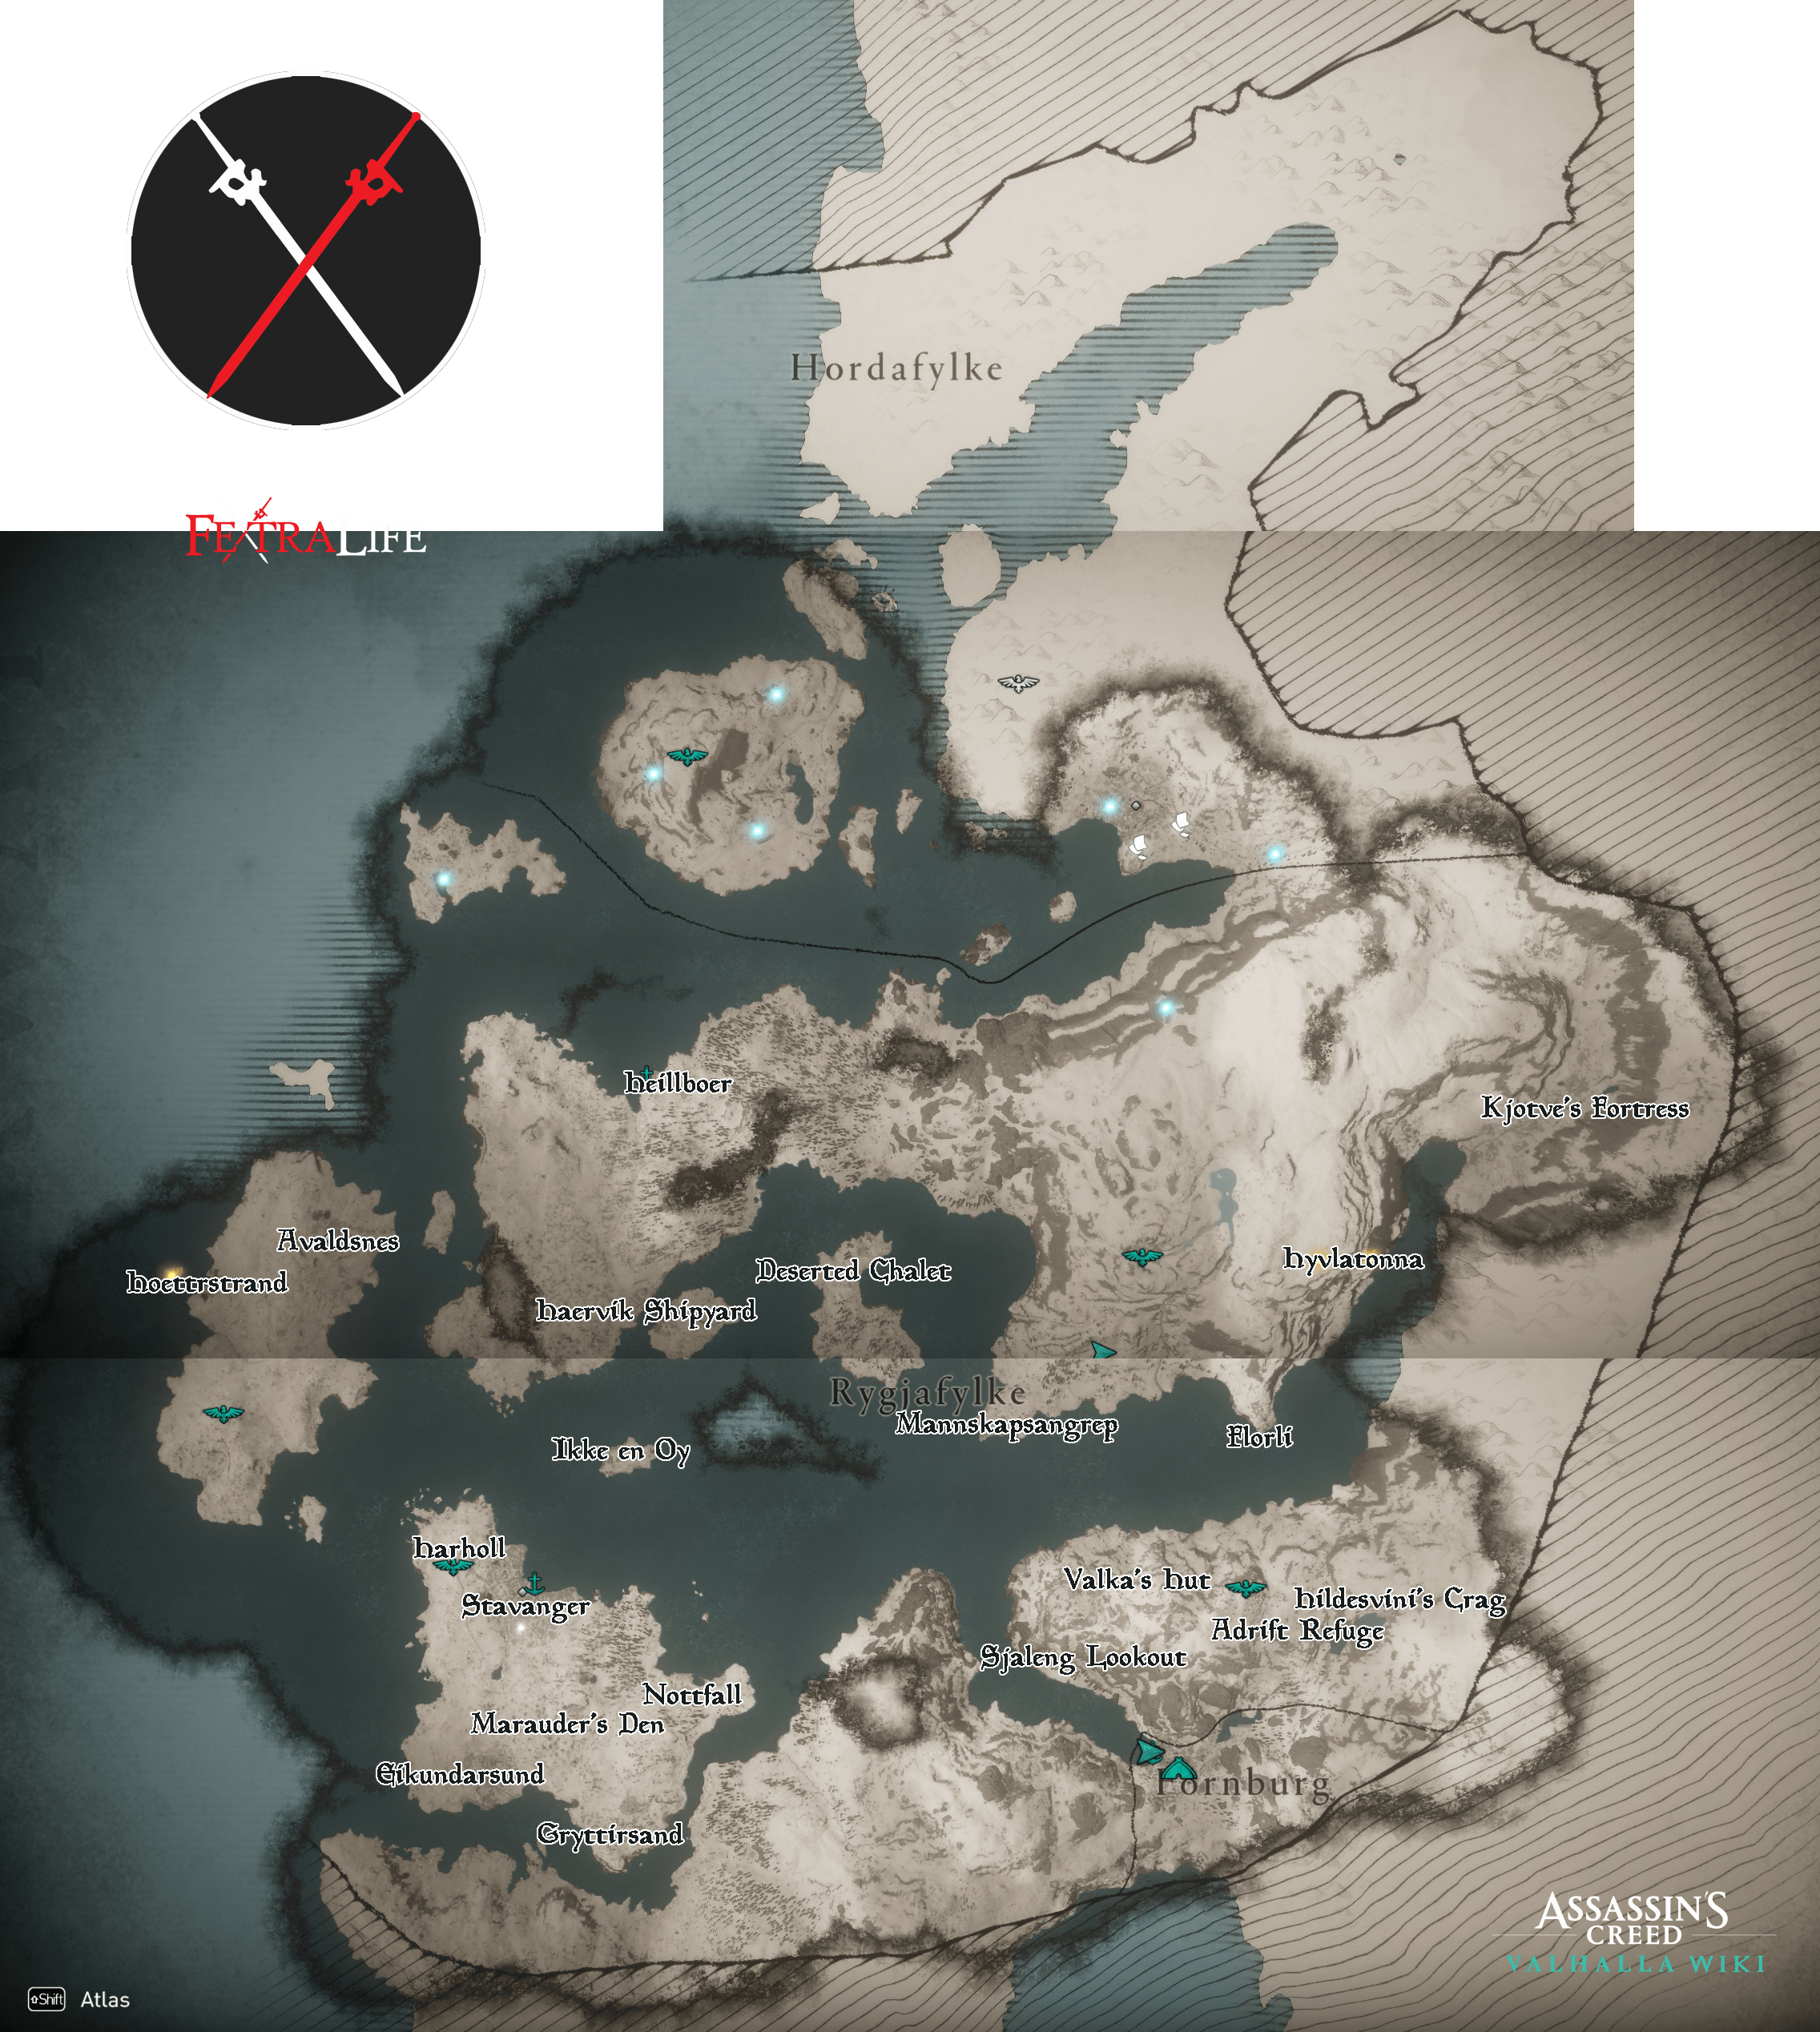 Rygjafylke Hoard Map location: Assassin's Creed Valhalla guide